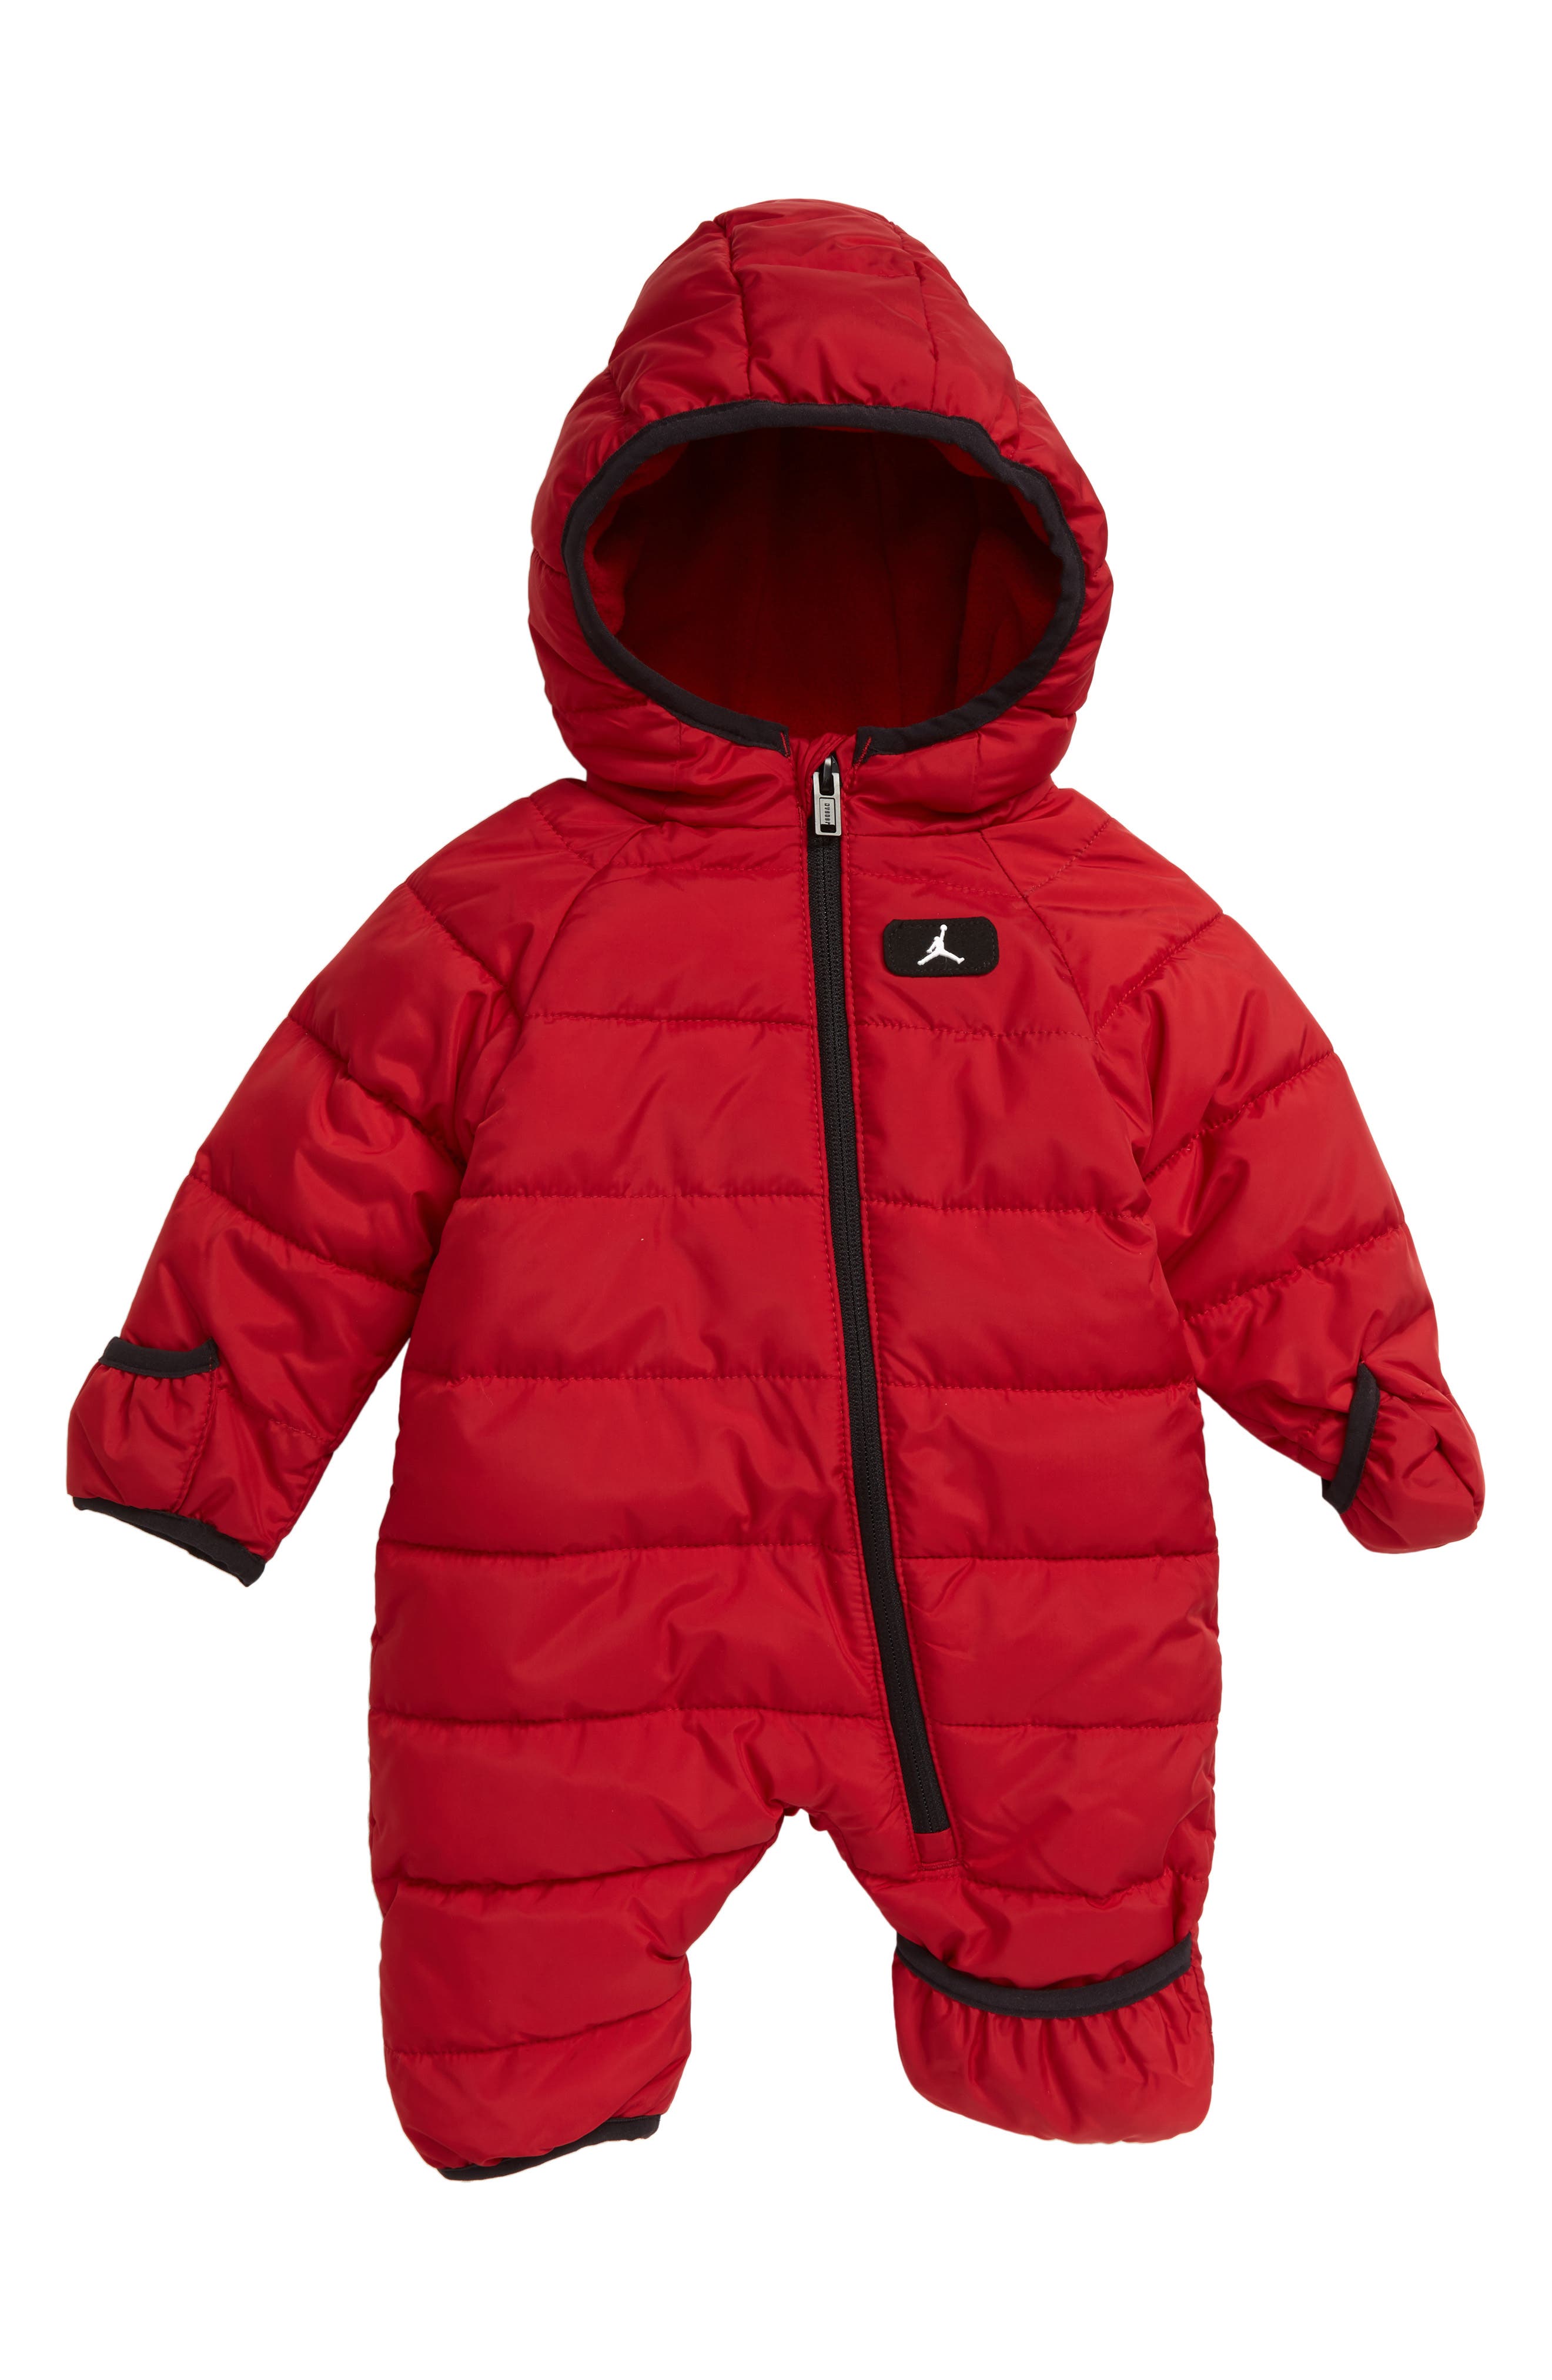 nike snowsuit for infants